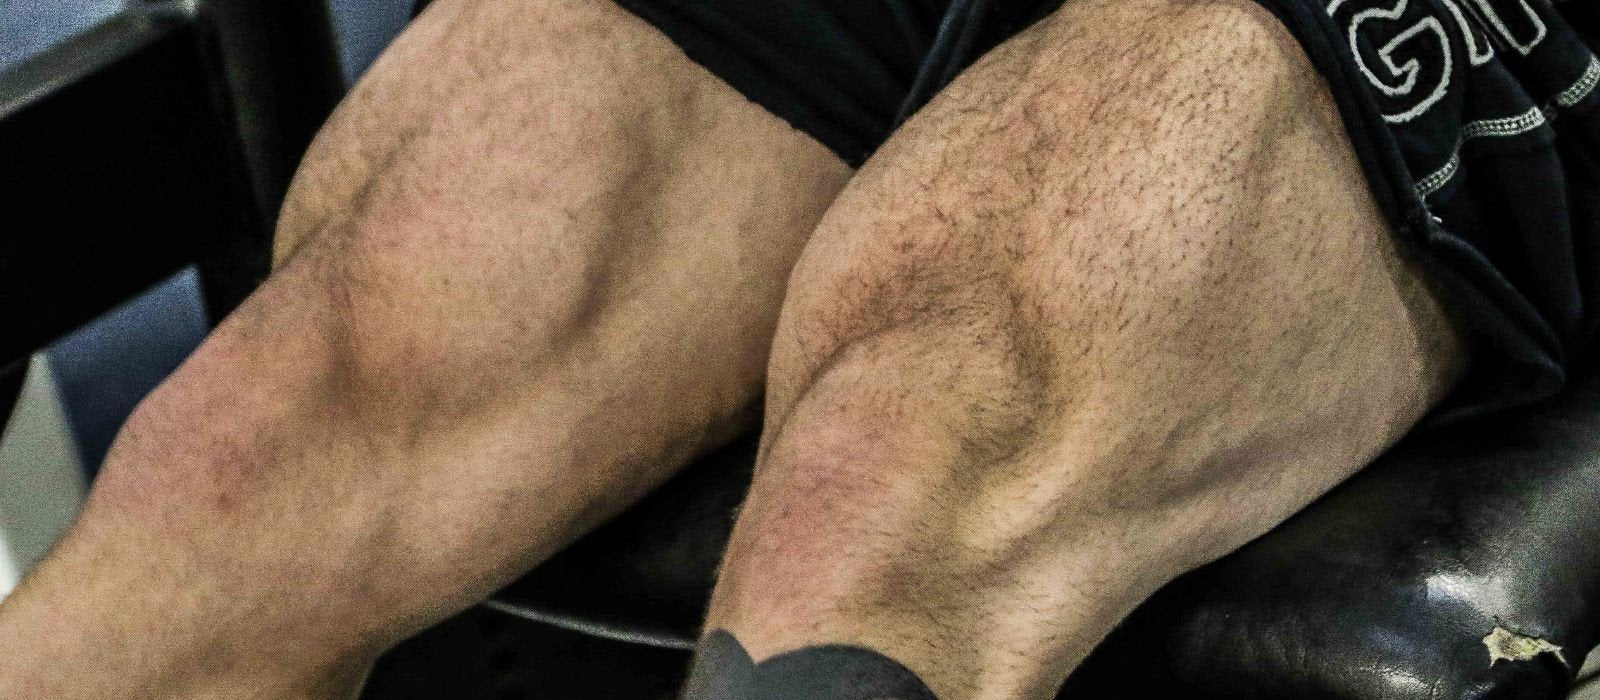 Kris Gethin Smashing Legs After the 2015 Mr. Olympia